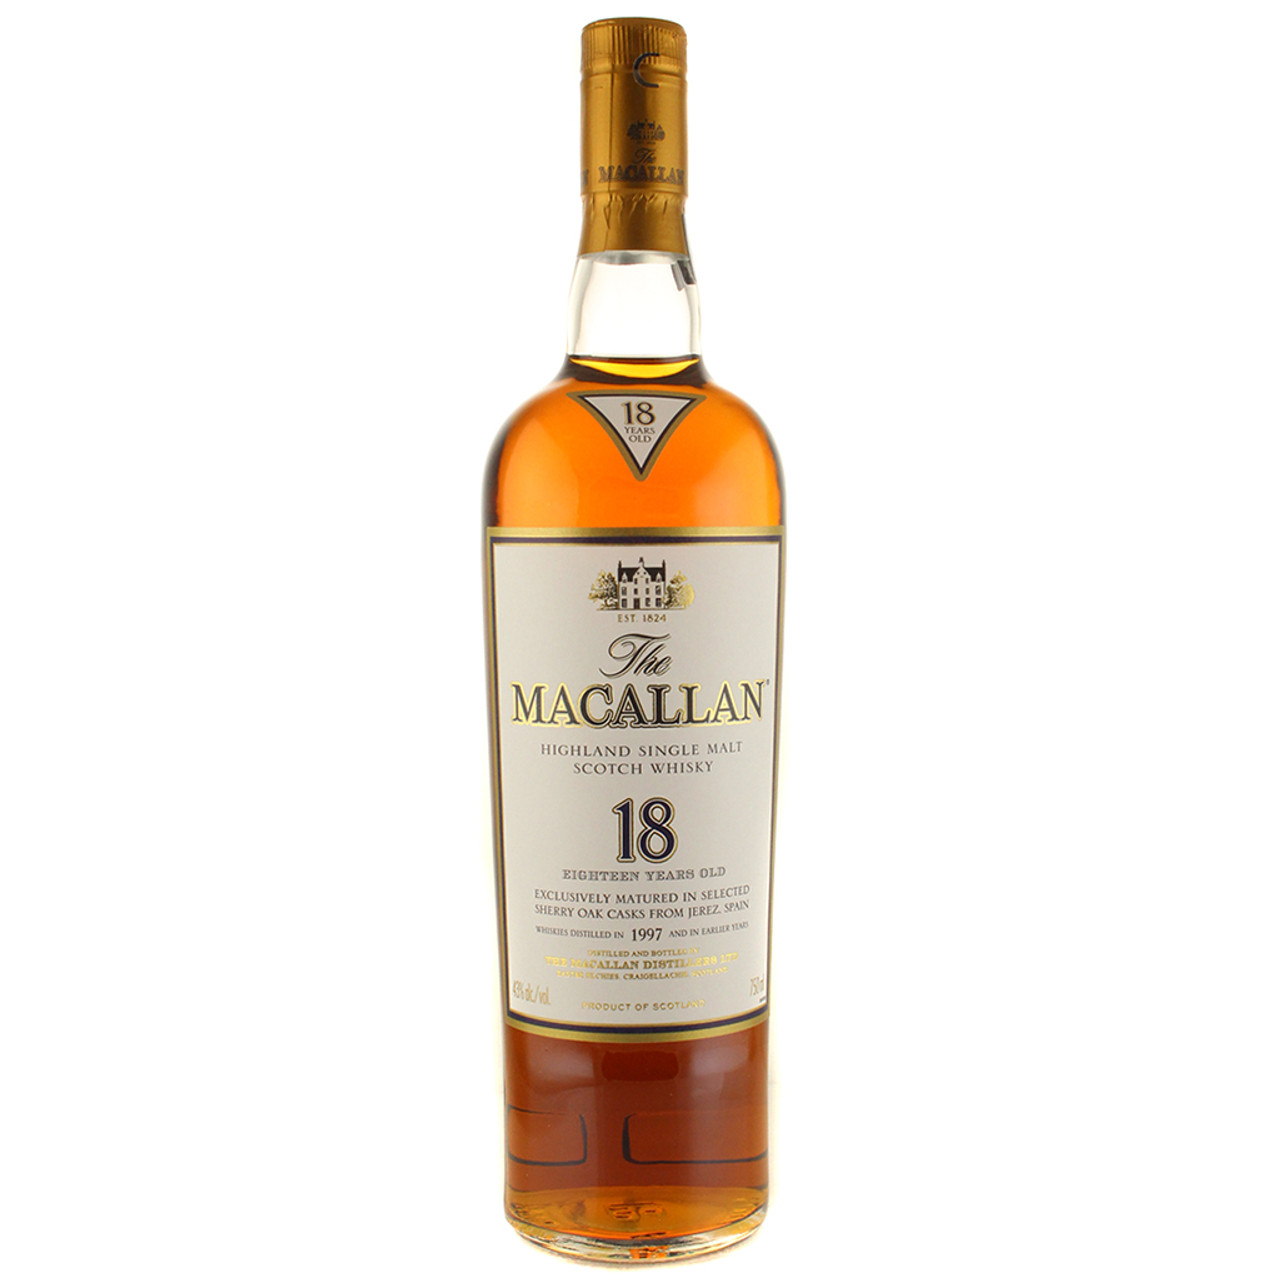 Jura 18 Year Old | Single Malt Scotch Whisky NV / 750 ml.